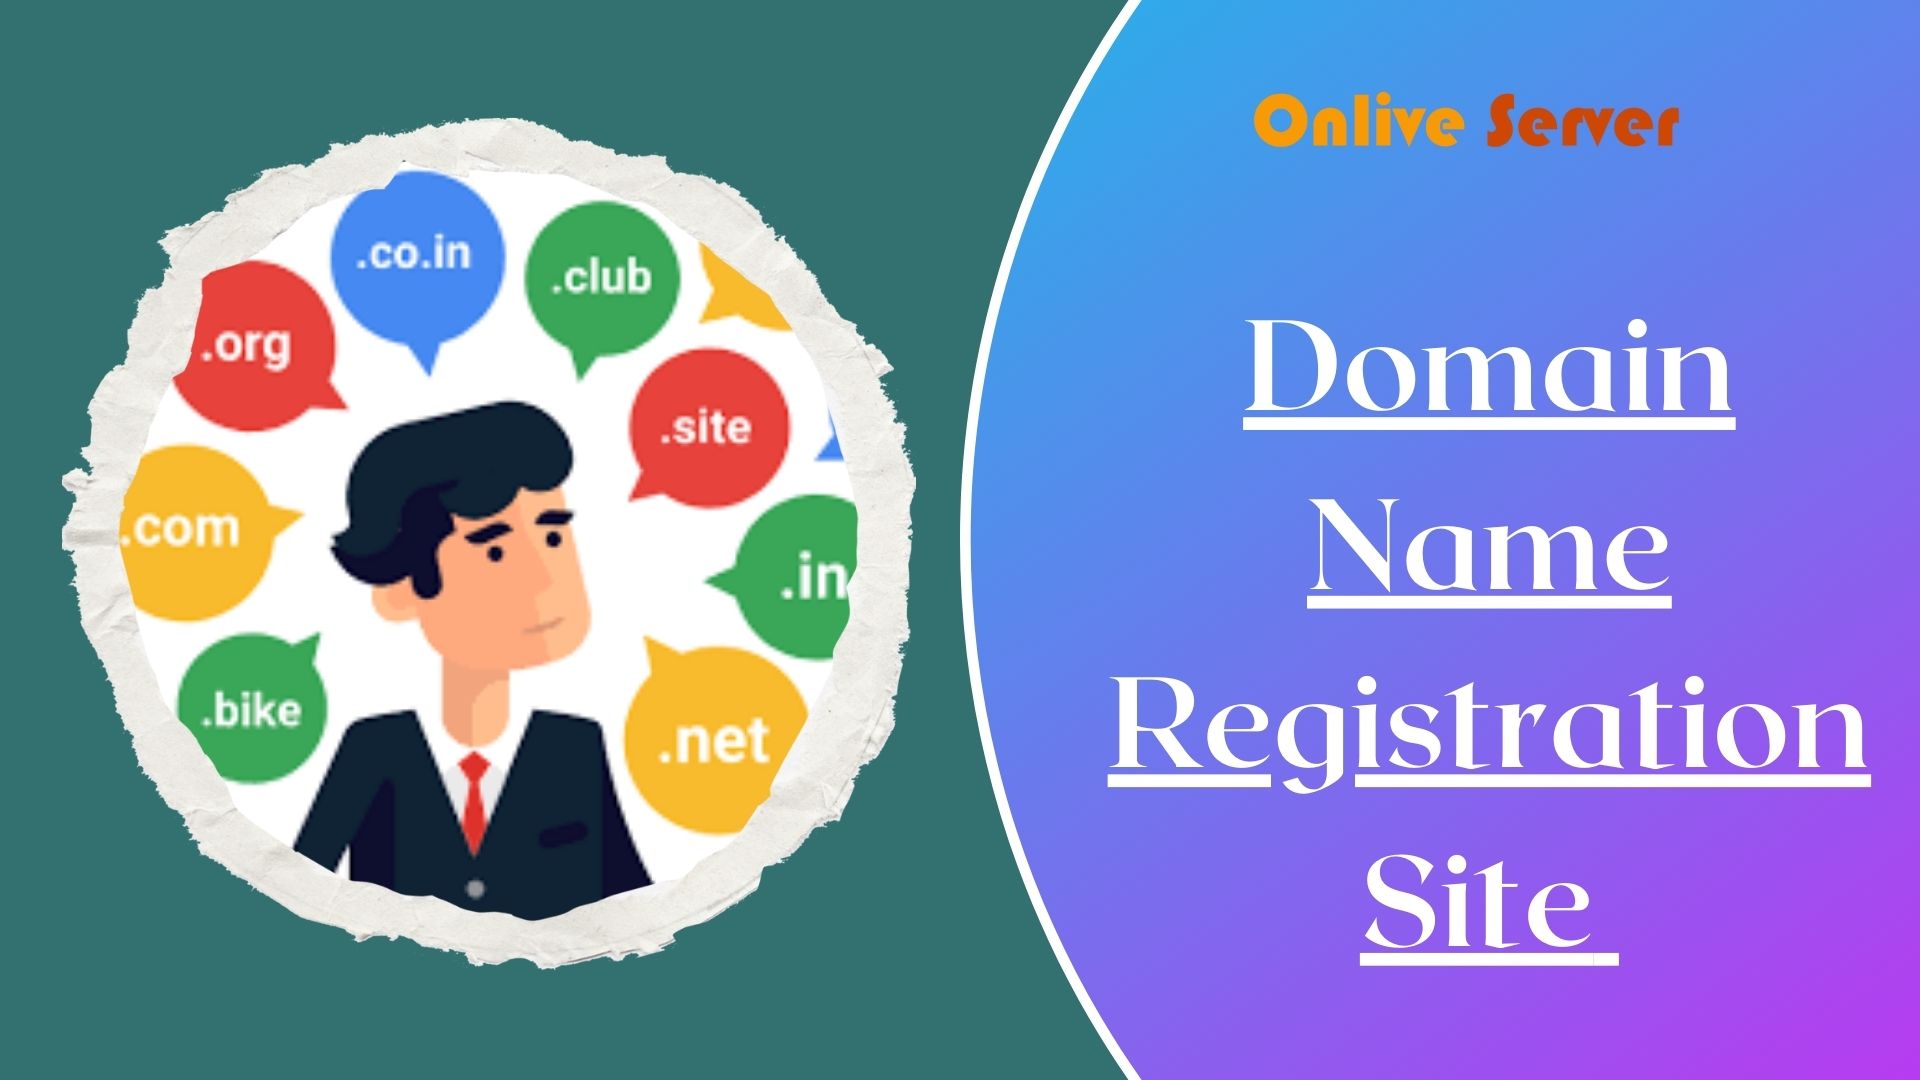 Domain Name Registration Site (1)